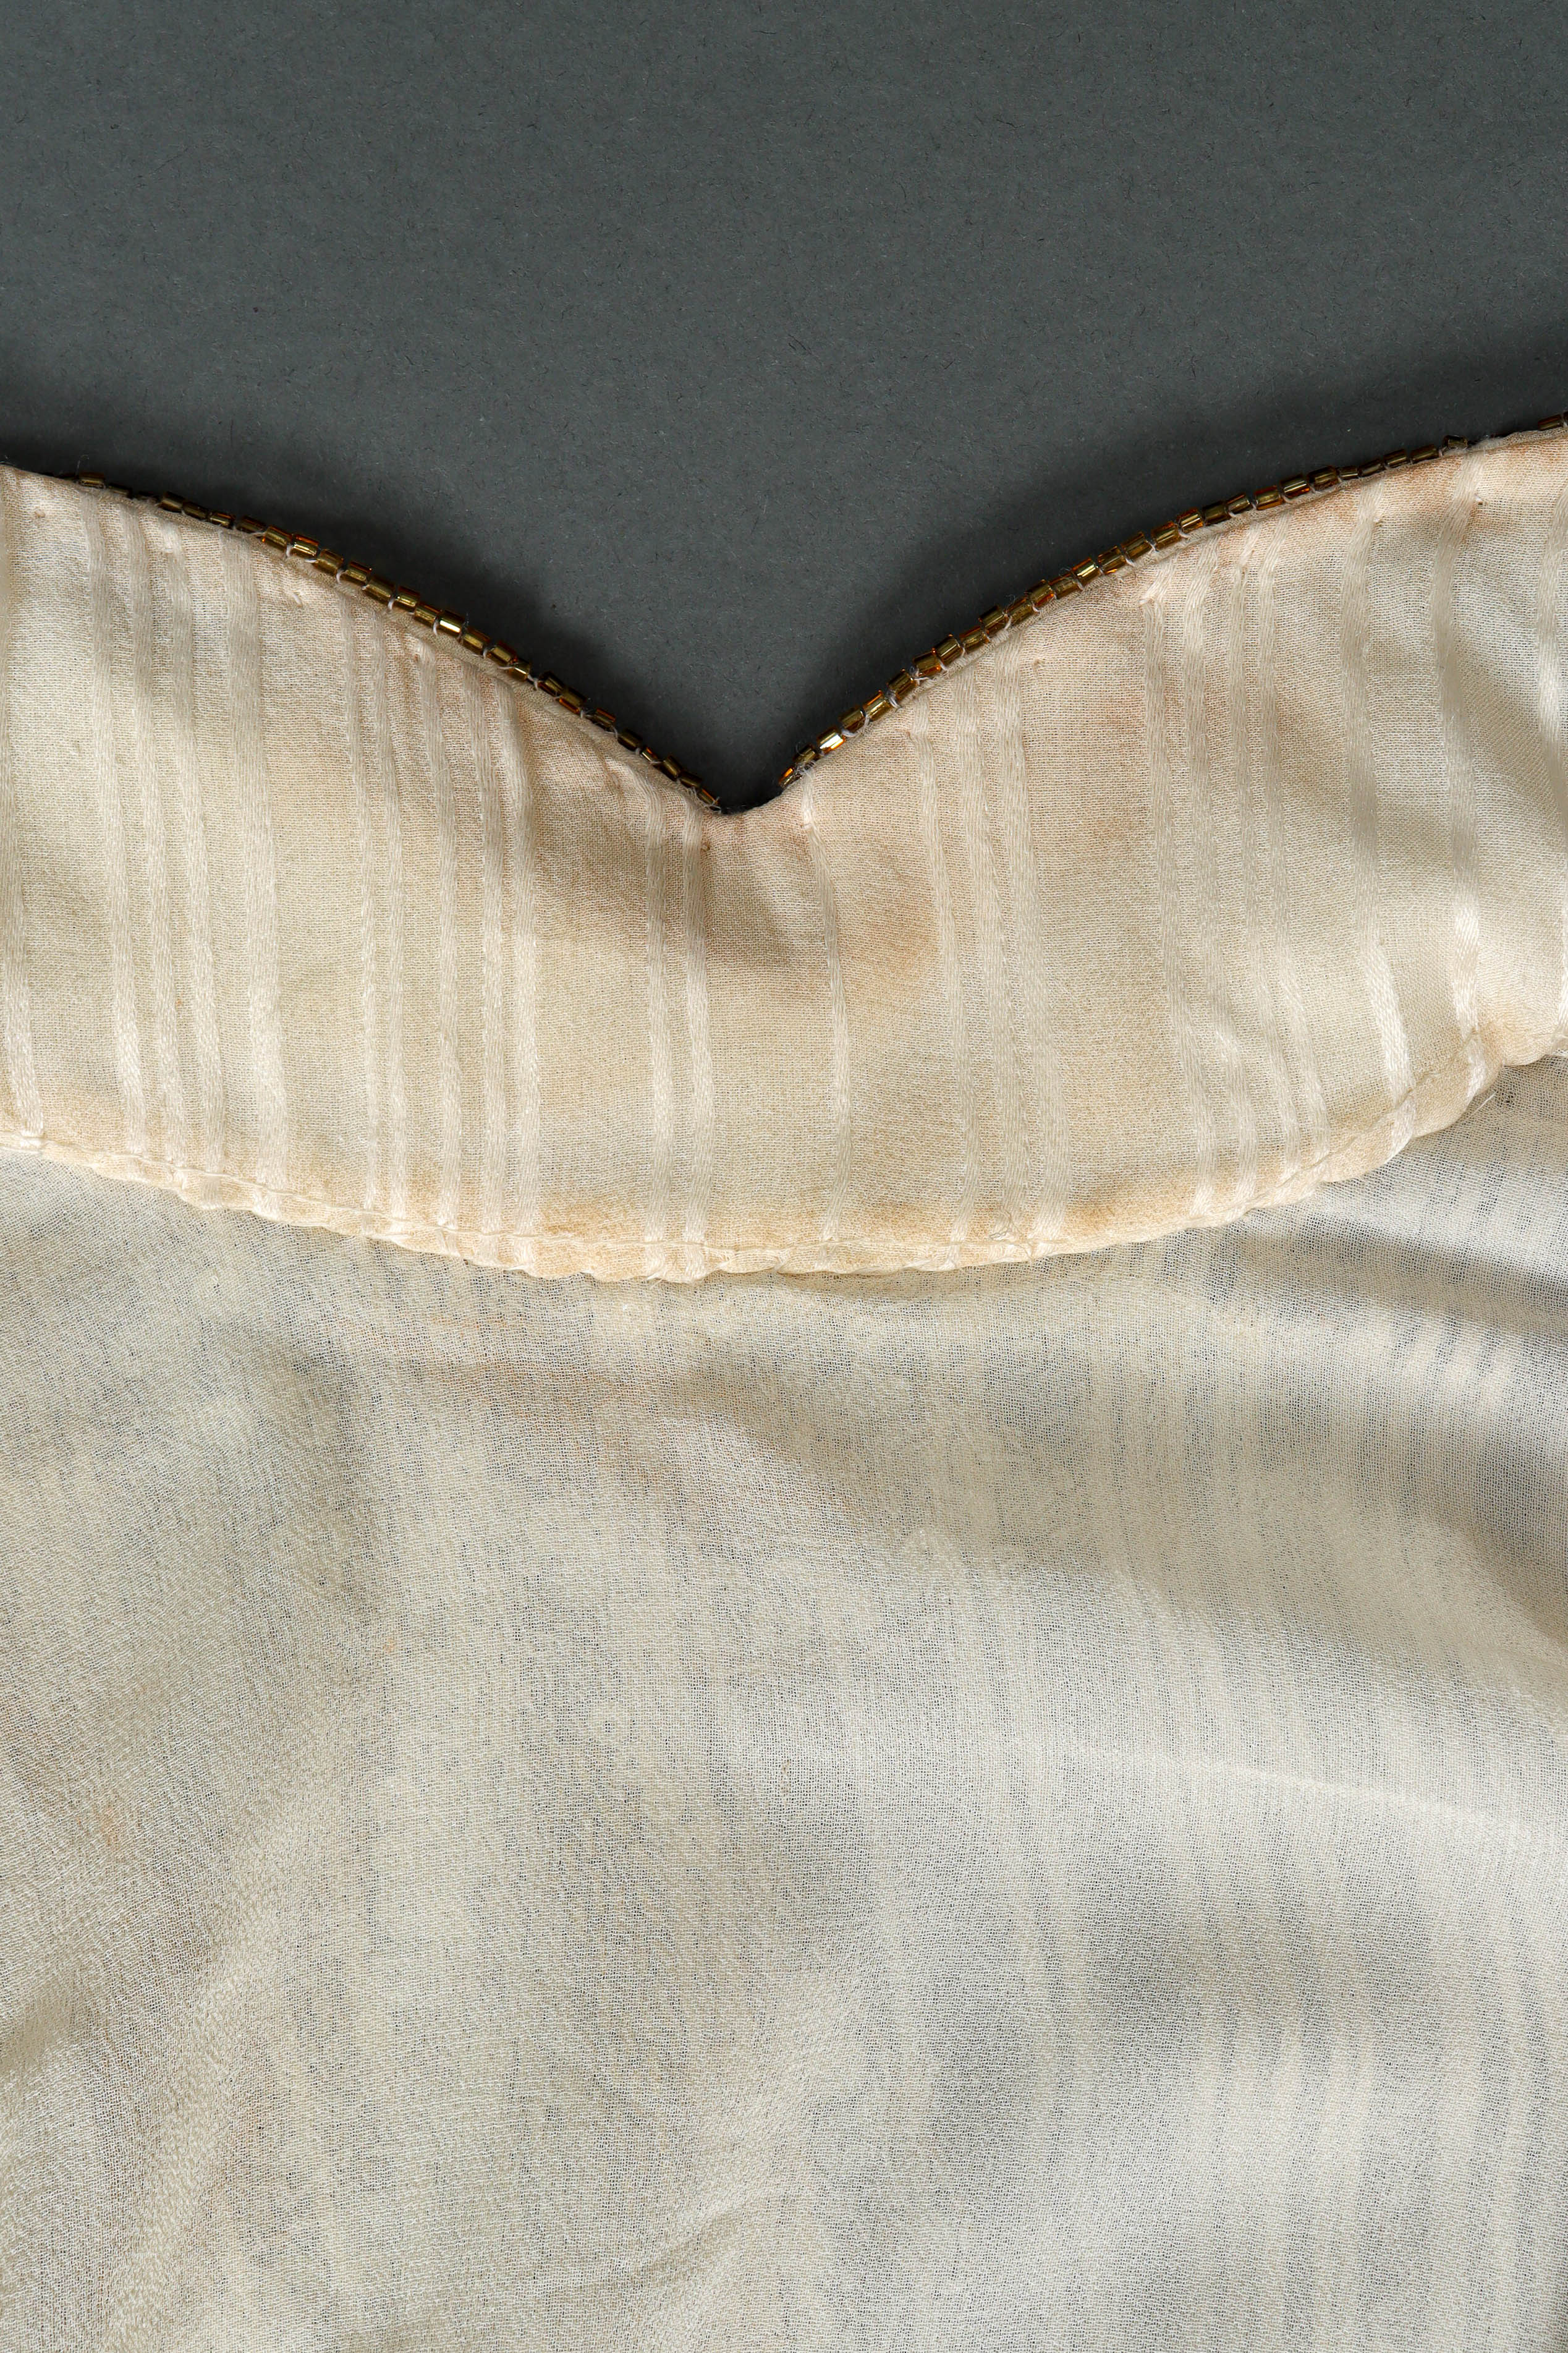 Vintage Bob Mackie Beaded Sequin Long Sleeve Dress inverse collar stain @ Recess LA